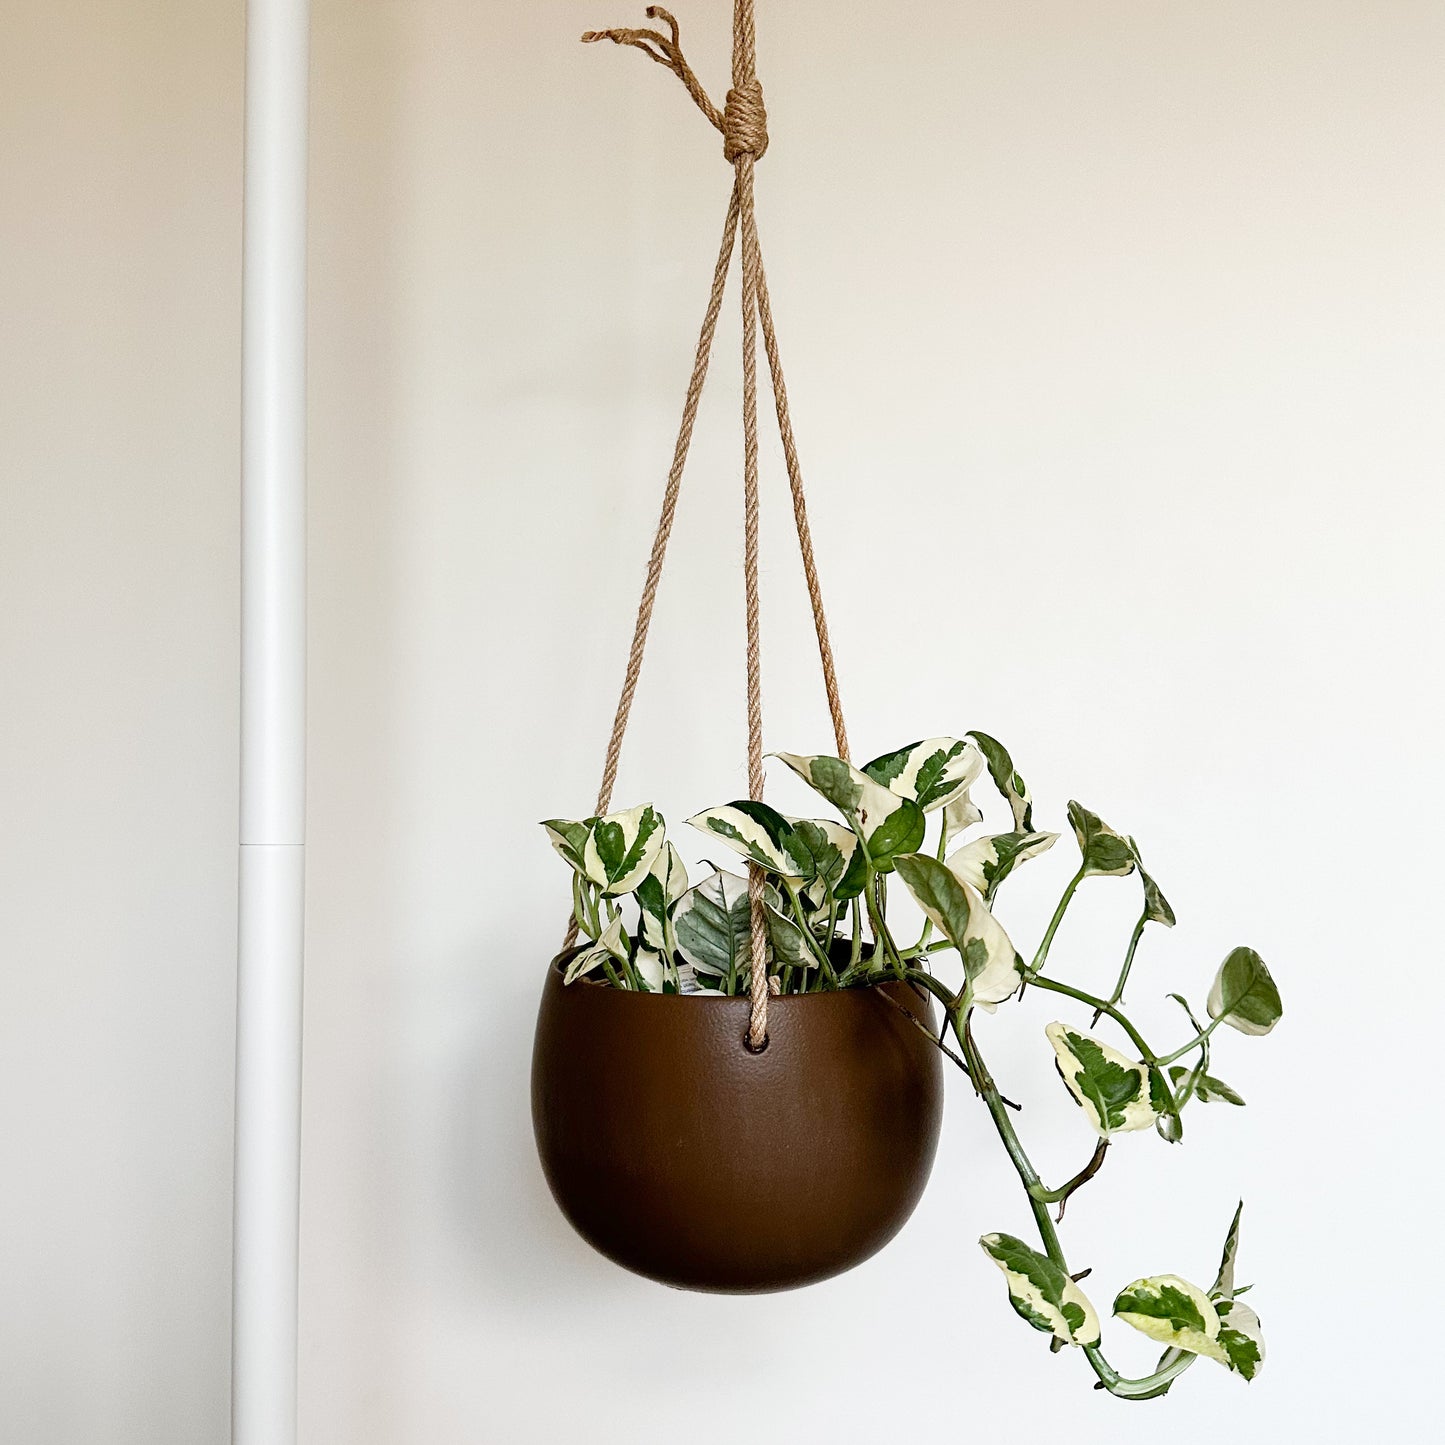 Lolly Ceramic Hanging Planter - Chocolate